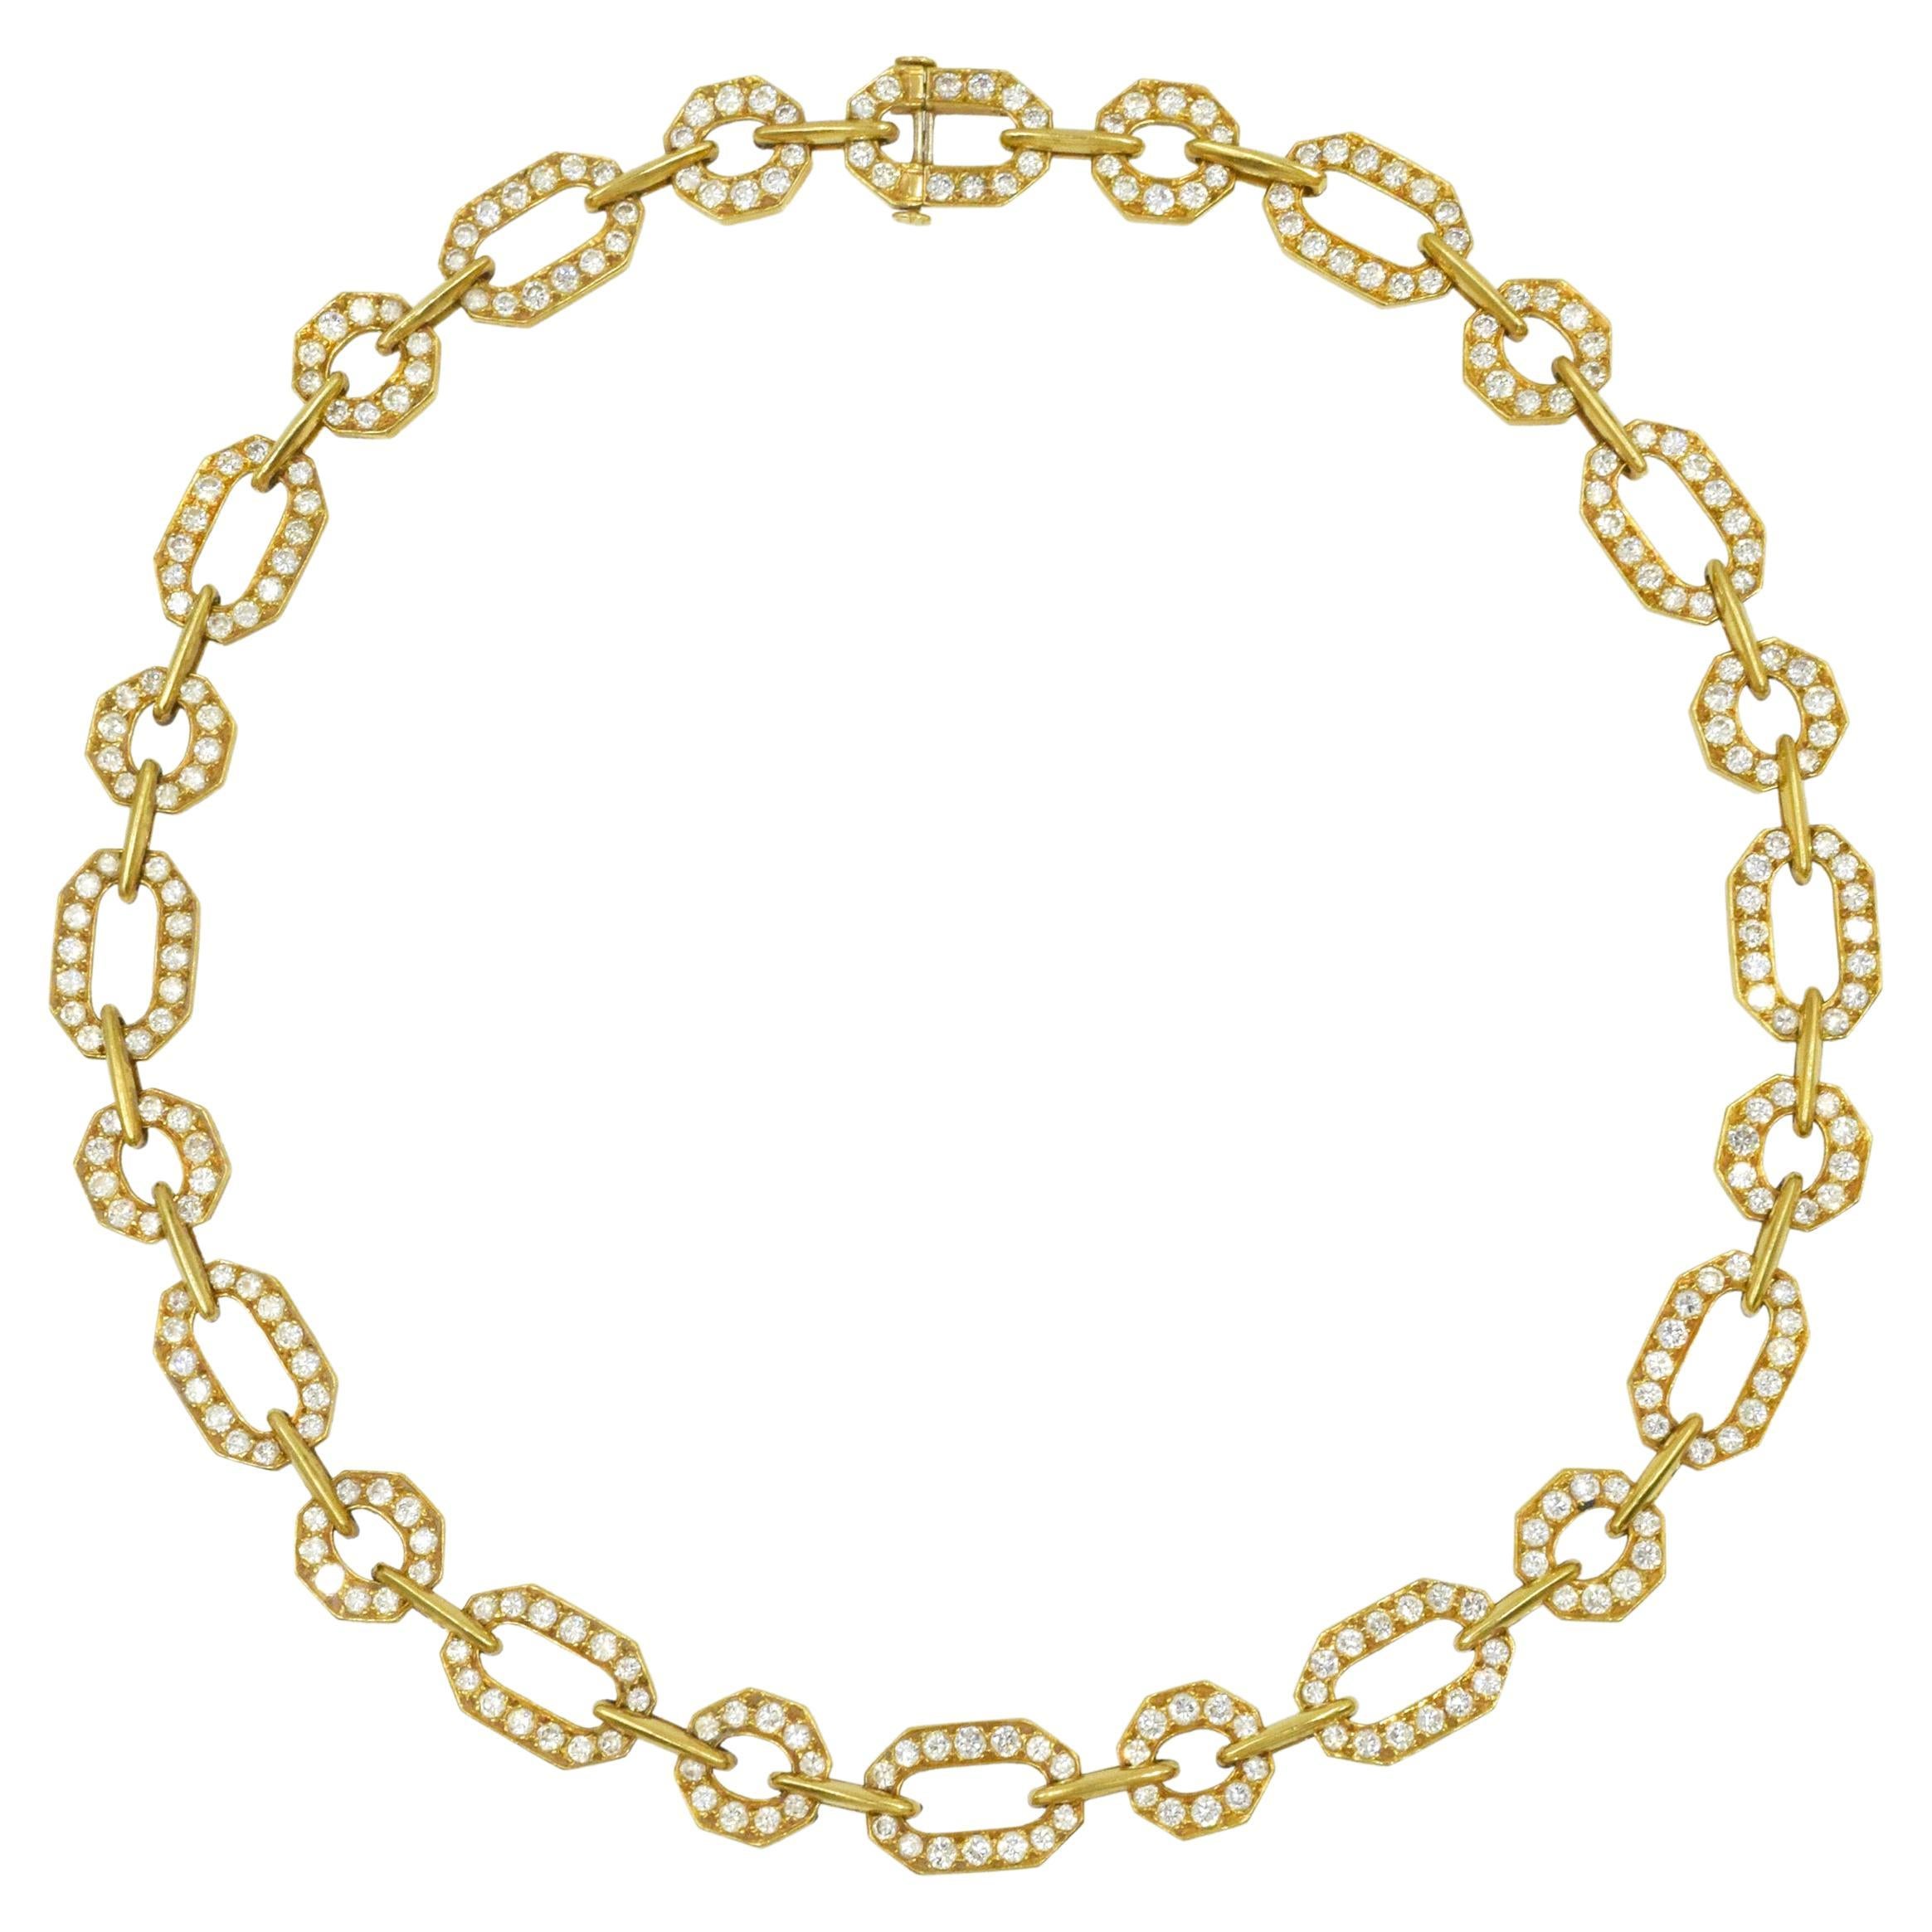 Cartier Link Diamond Necklace 18k Gold